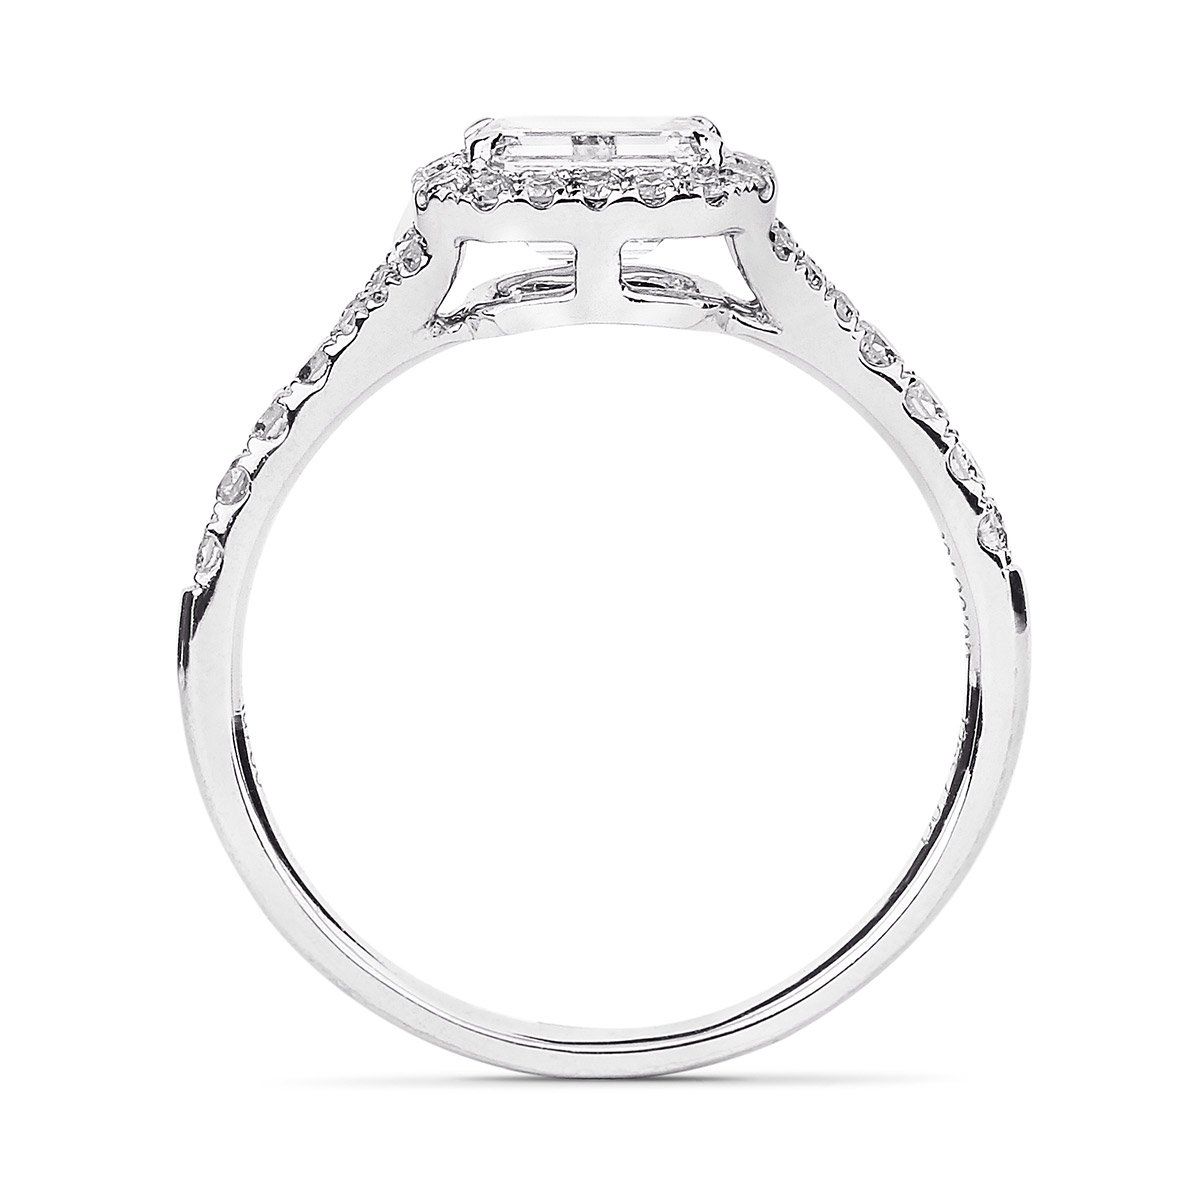 White Diamond Ring, 0.74 Carat, Emerald shape